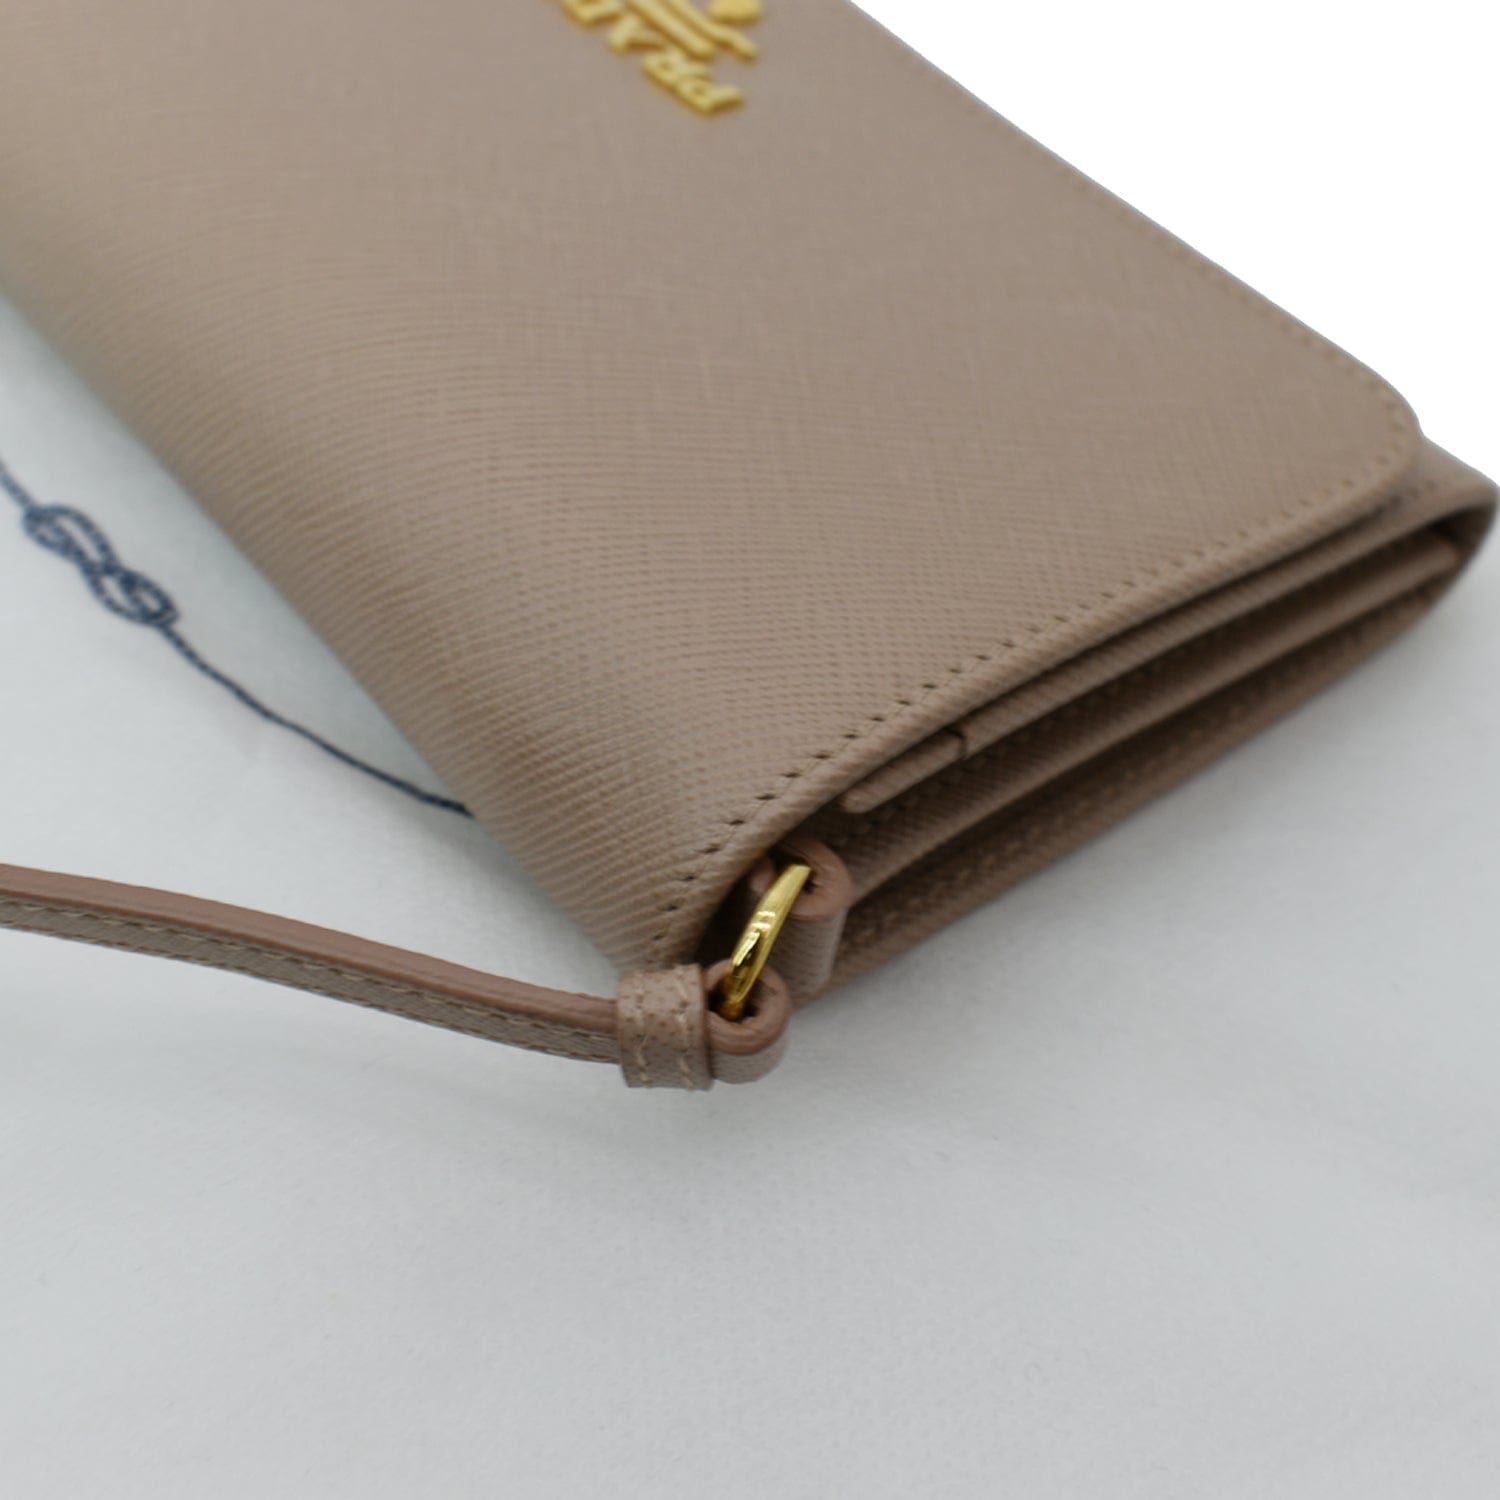 Prada Small Saffiano Leather Double Bag in Natural